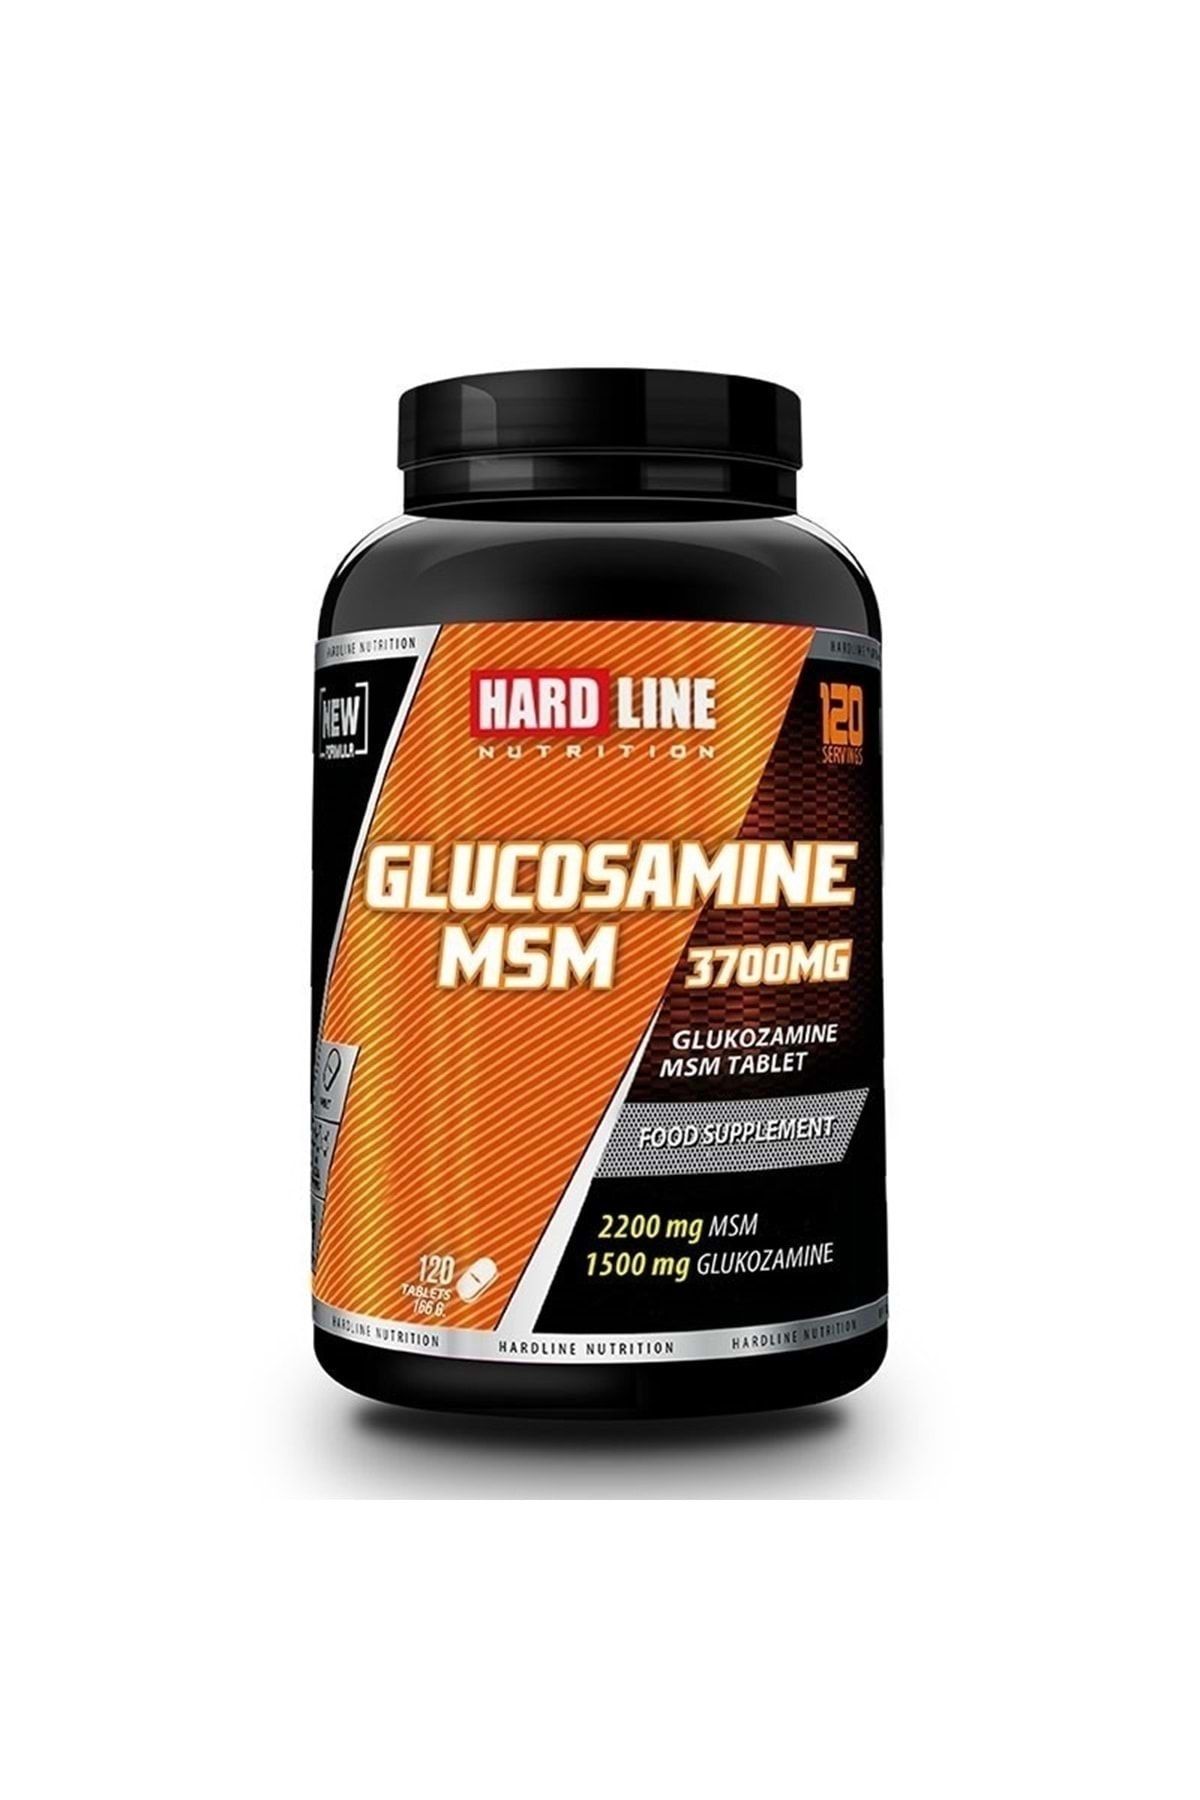 Hardline Glucosamine Msm 3700 120 Tablets